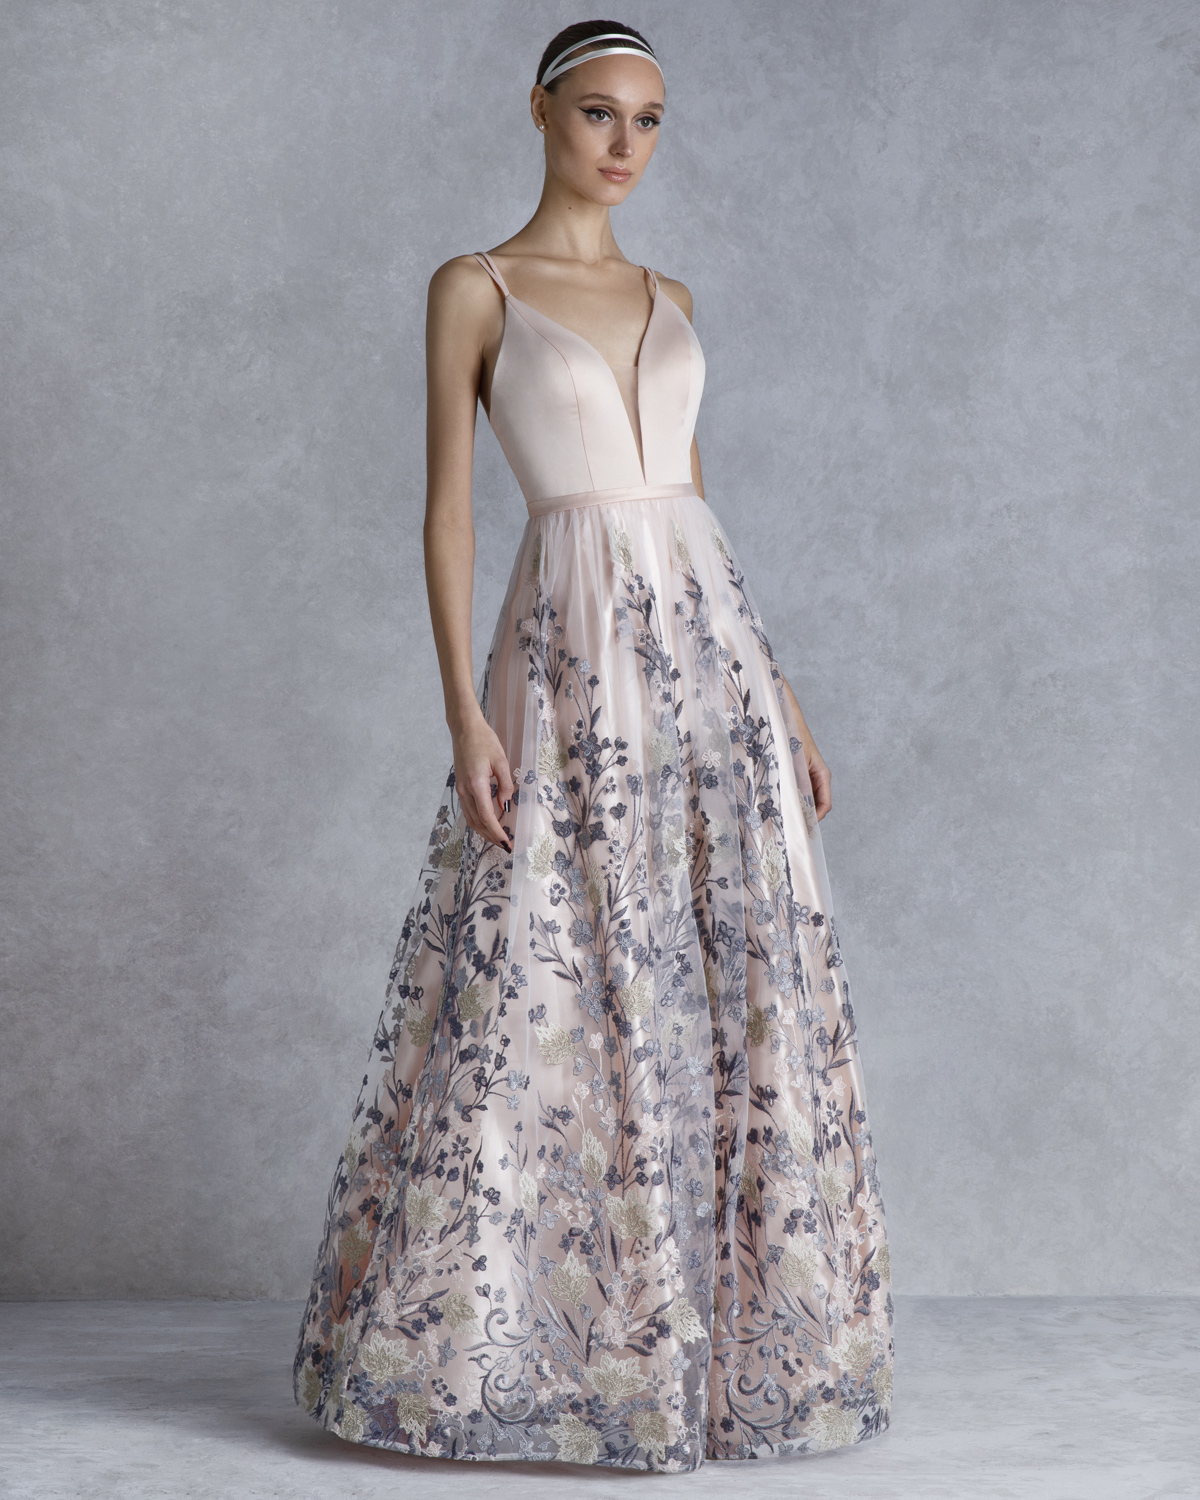 Long evening tulle dress with floral lace appliqués